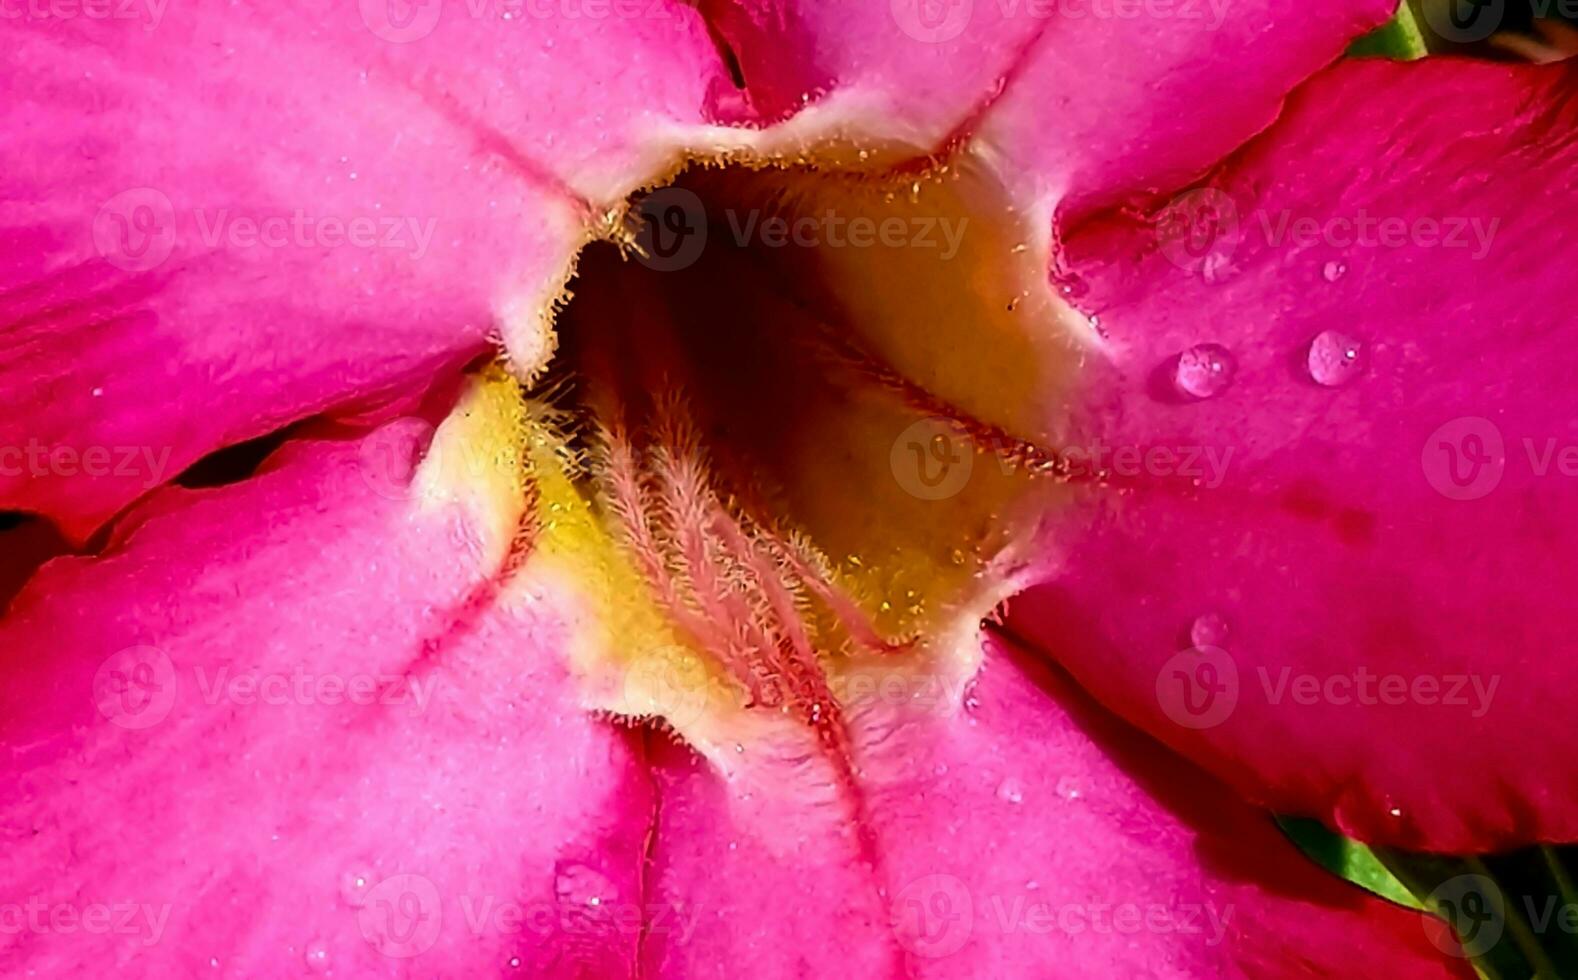 Beautiful close up of pink flower Pink allamanda or Allamanda blanchetii A DC, or Apocynaceae or kembang sepatu photo